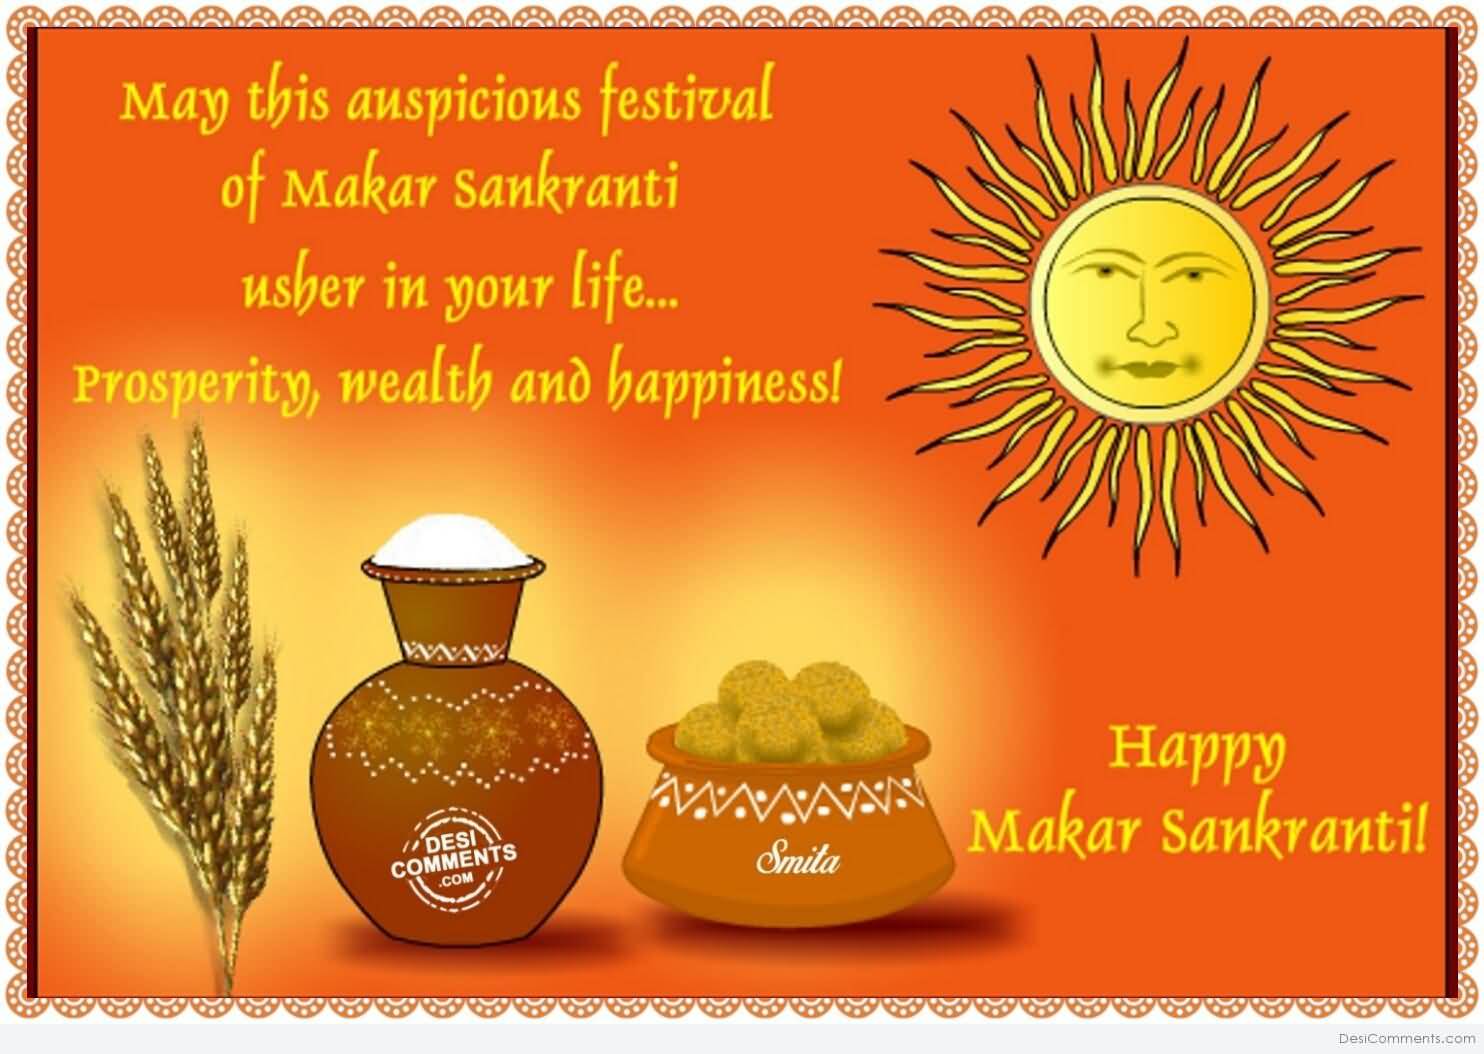 May This Auspicious Festival Of Makar Sankranti Usher In Your Life Prosperity Wealth And Happiness Happy Makar Sankranti